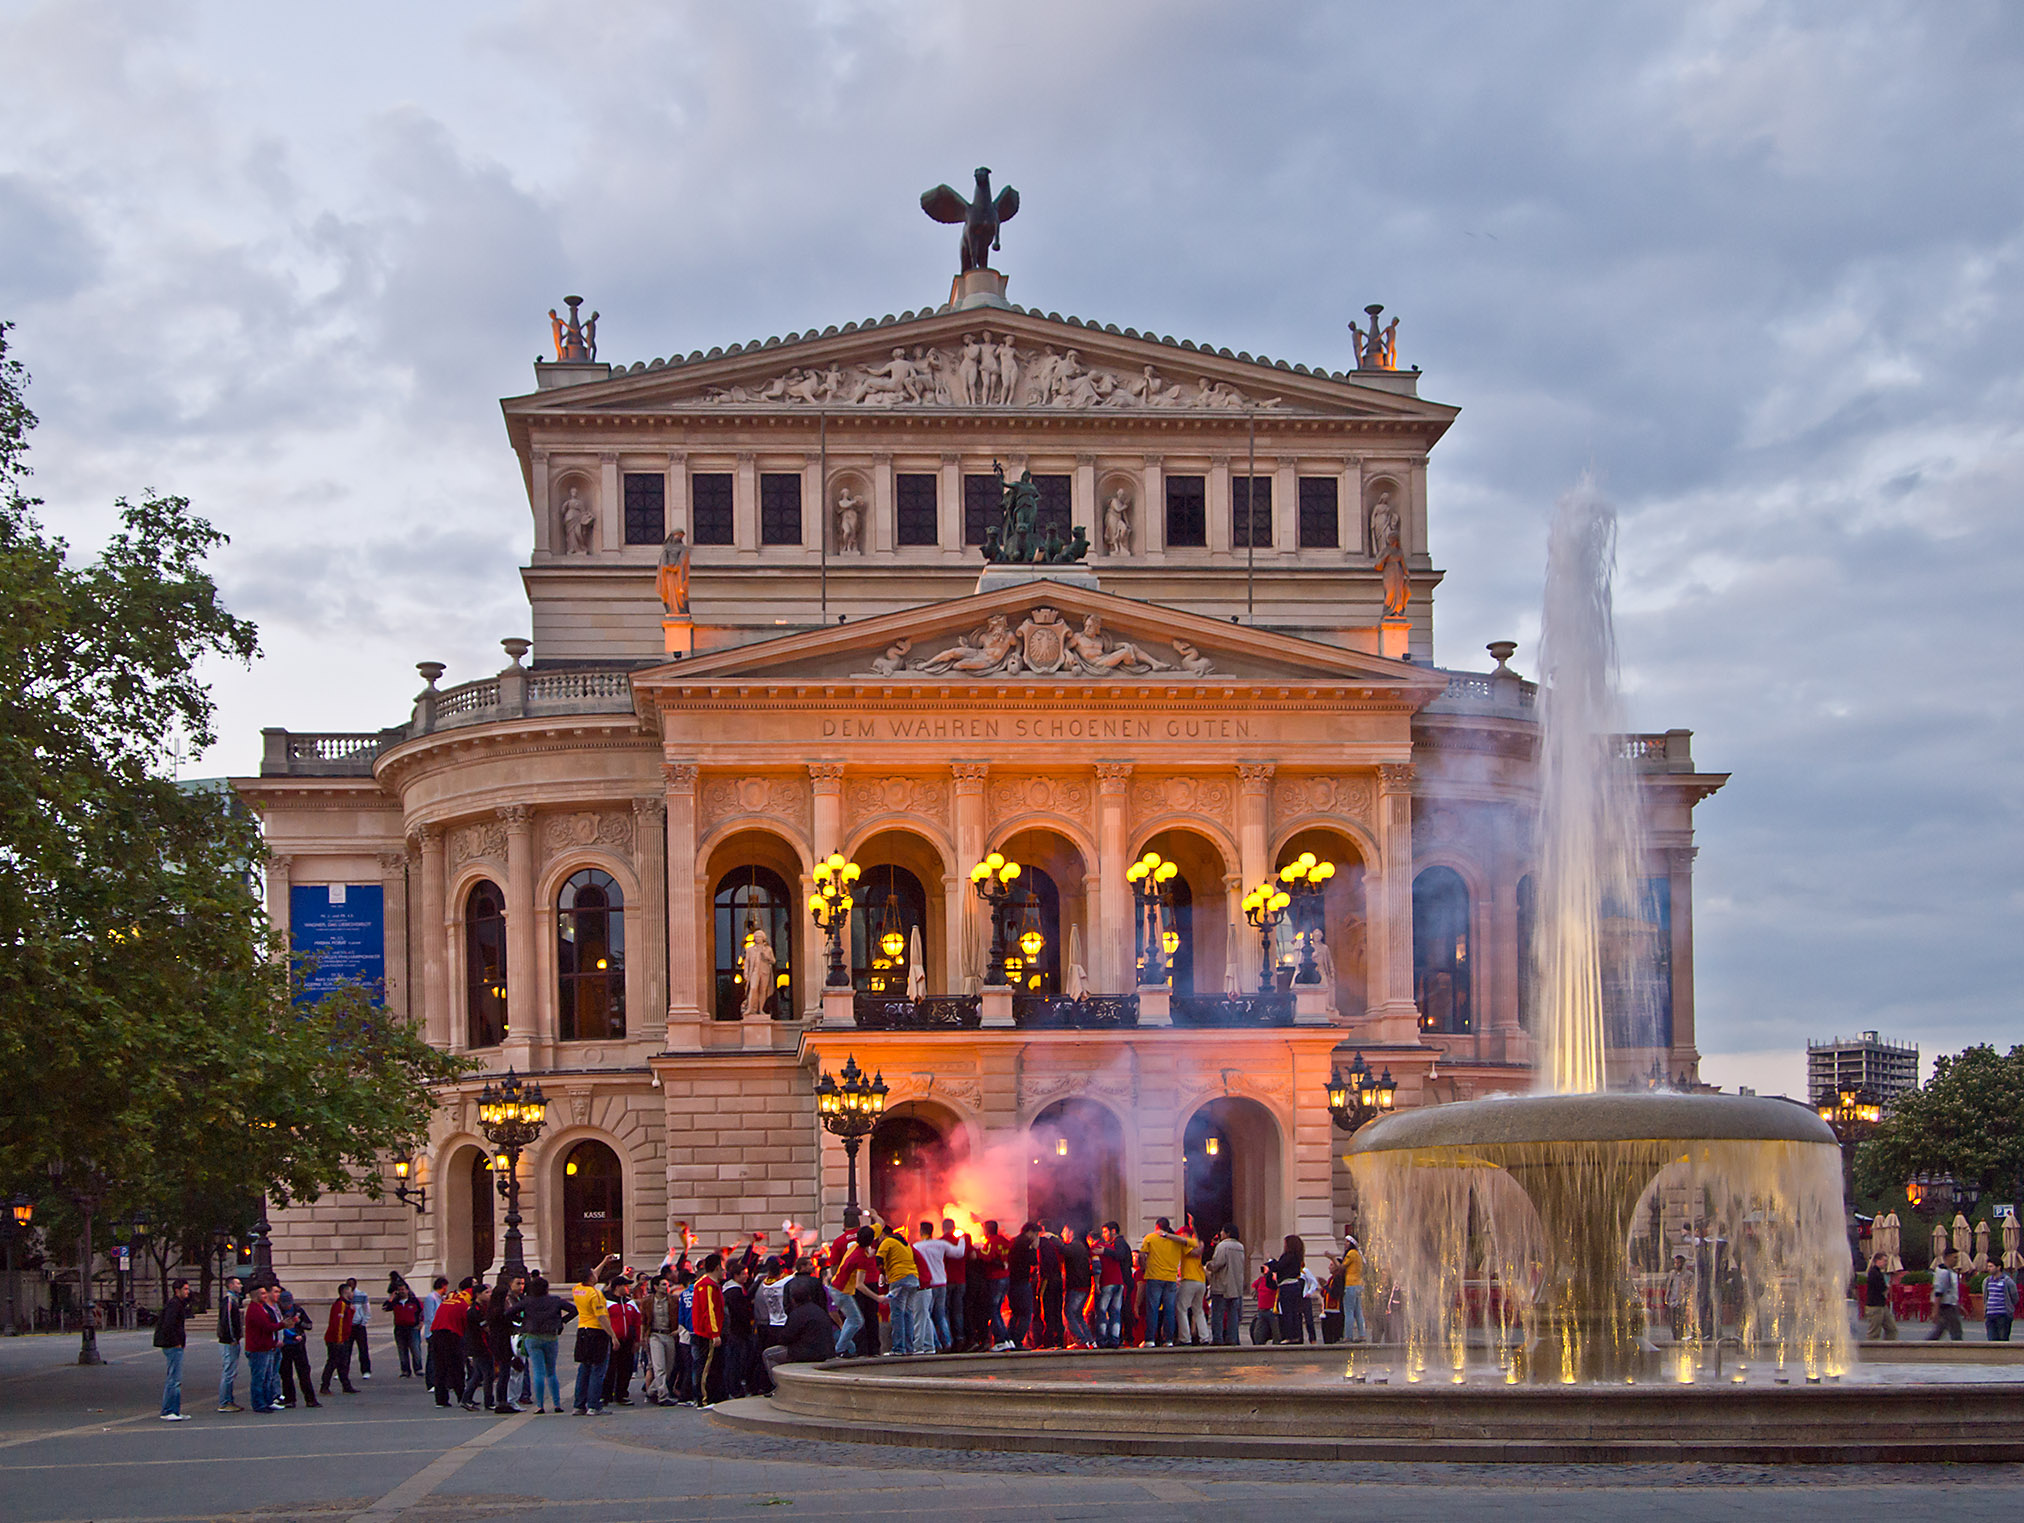 Nhà hát lớn Alte Oper - Old Opera | Yeudulich